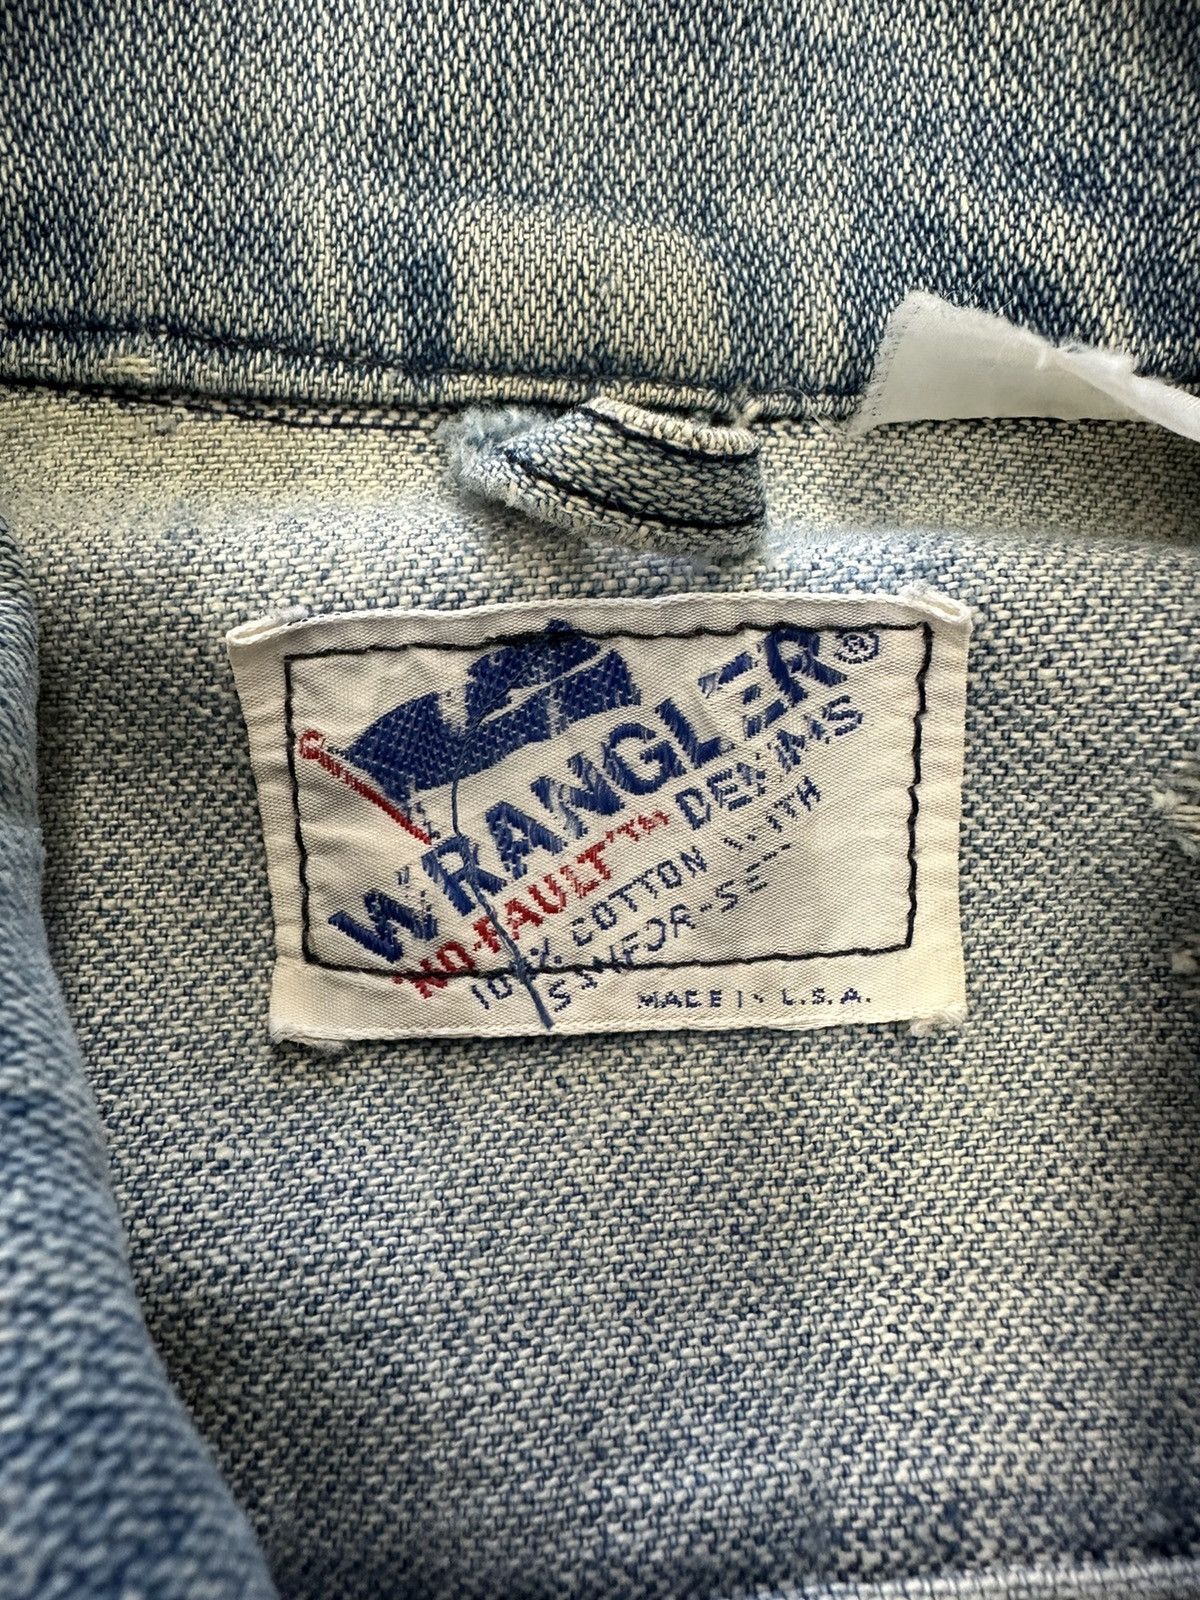 Vintage Vintage 1970s Wrangler Light Wash Denim Jacket Small Size US S / EU 44-46 / 1 - 3 Thumbnail